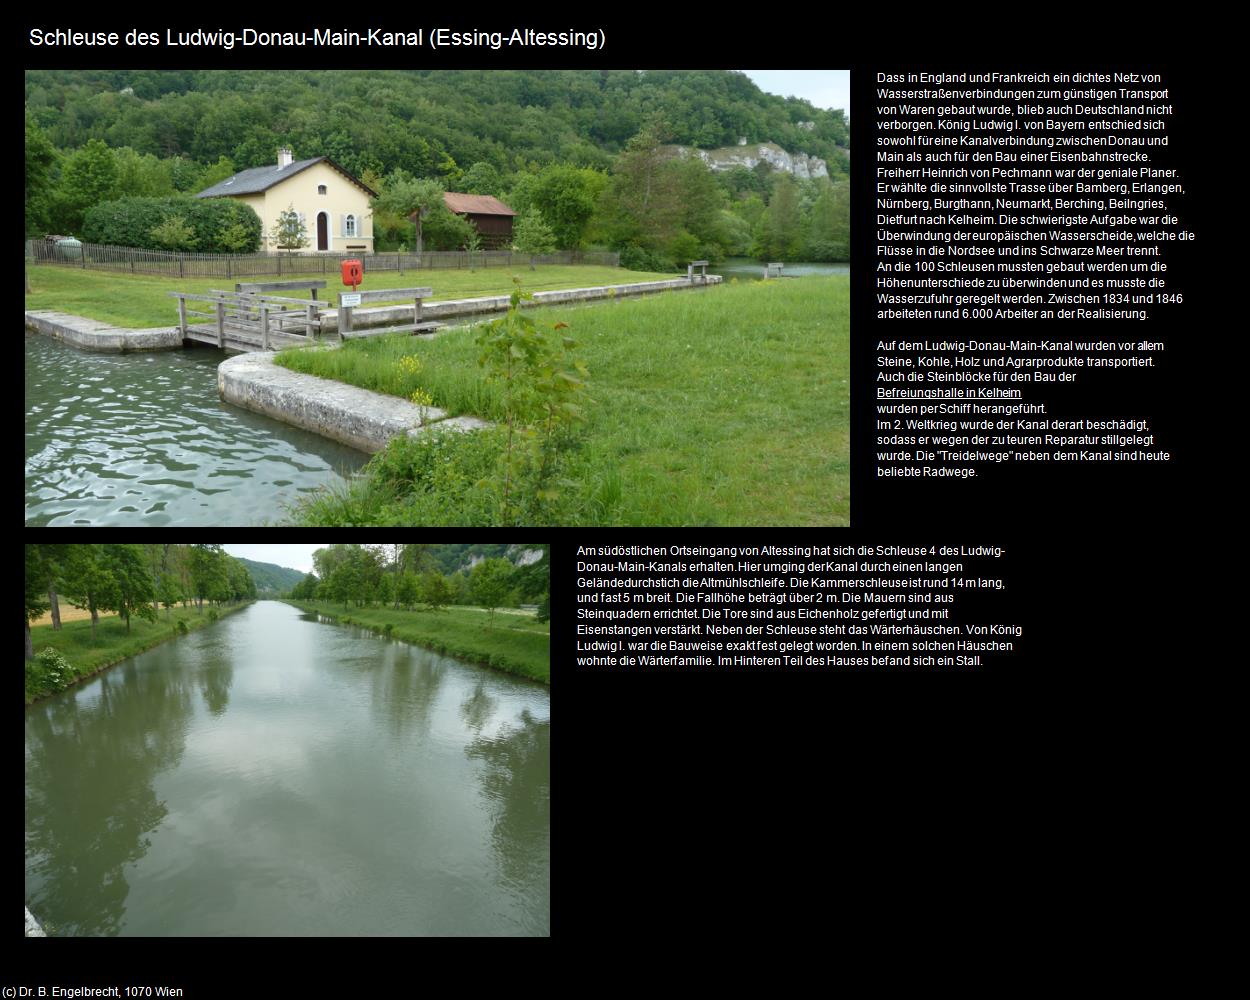 Schleuse des Ludwig-Donau-Main-Kanals (Altessing) (Essing) in Kulturatlas-BAYERN(c)B.Engelbrecht